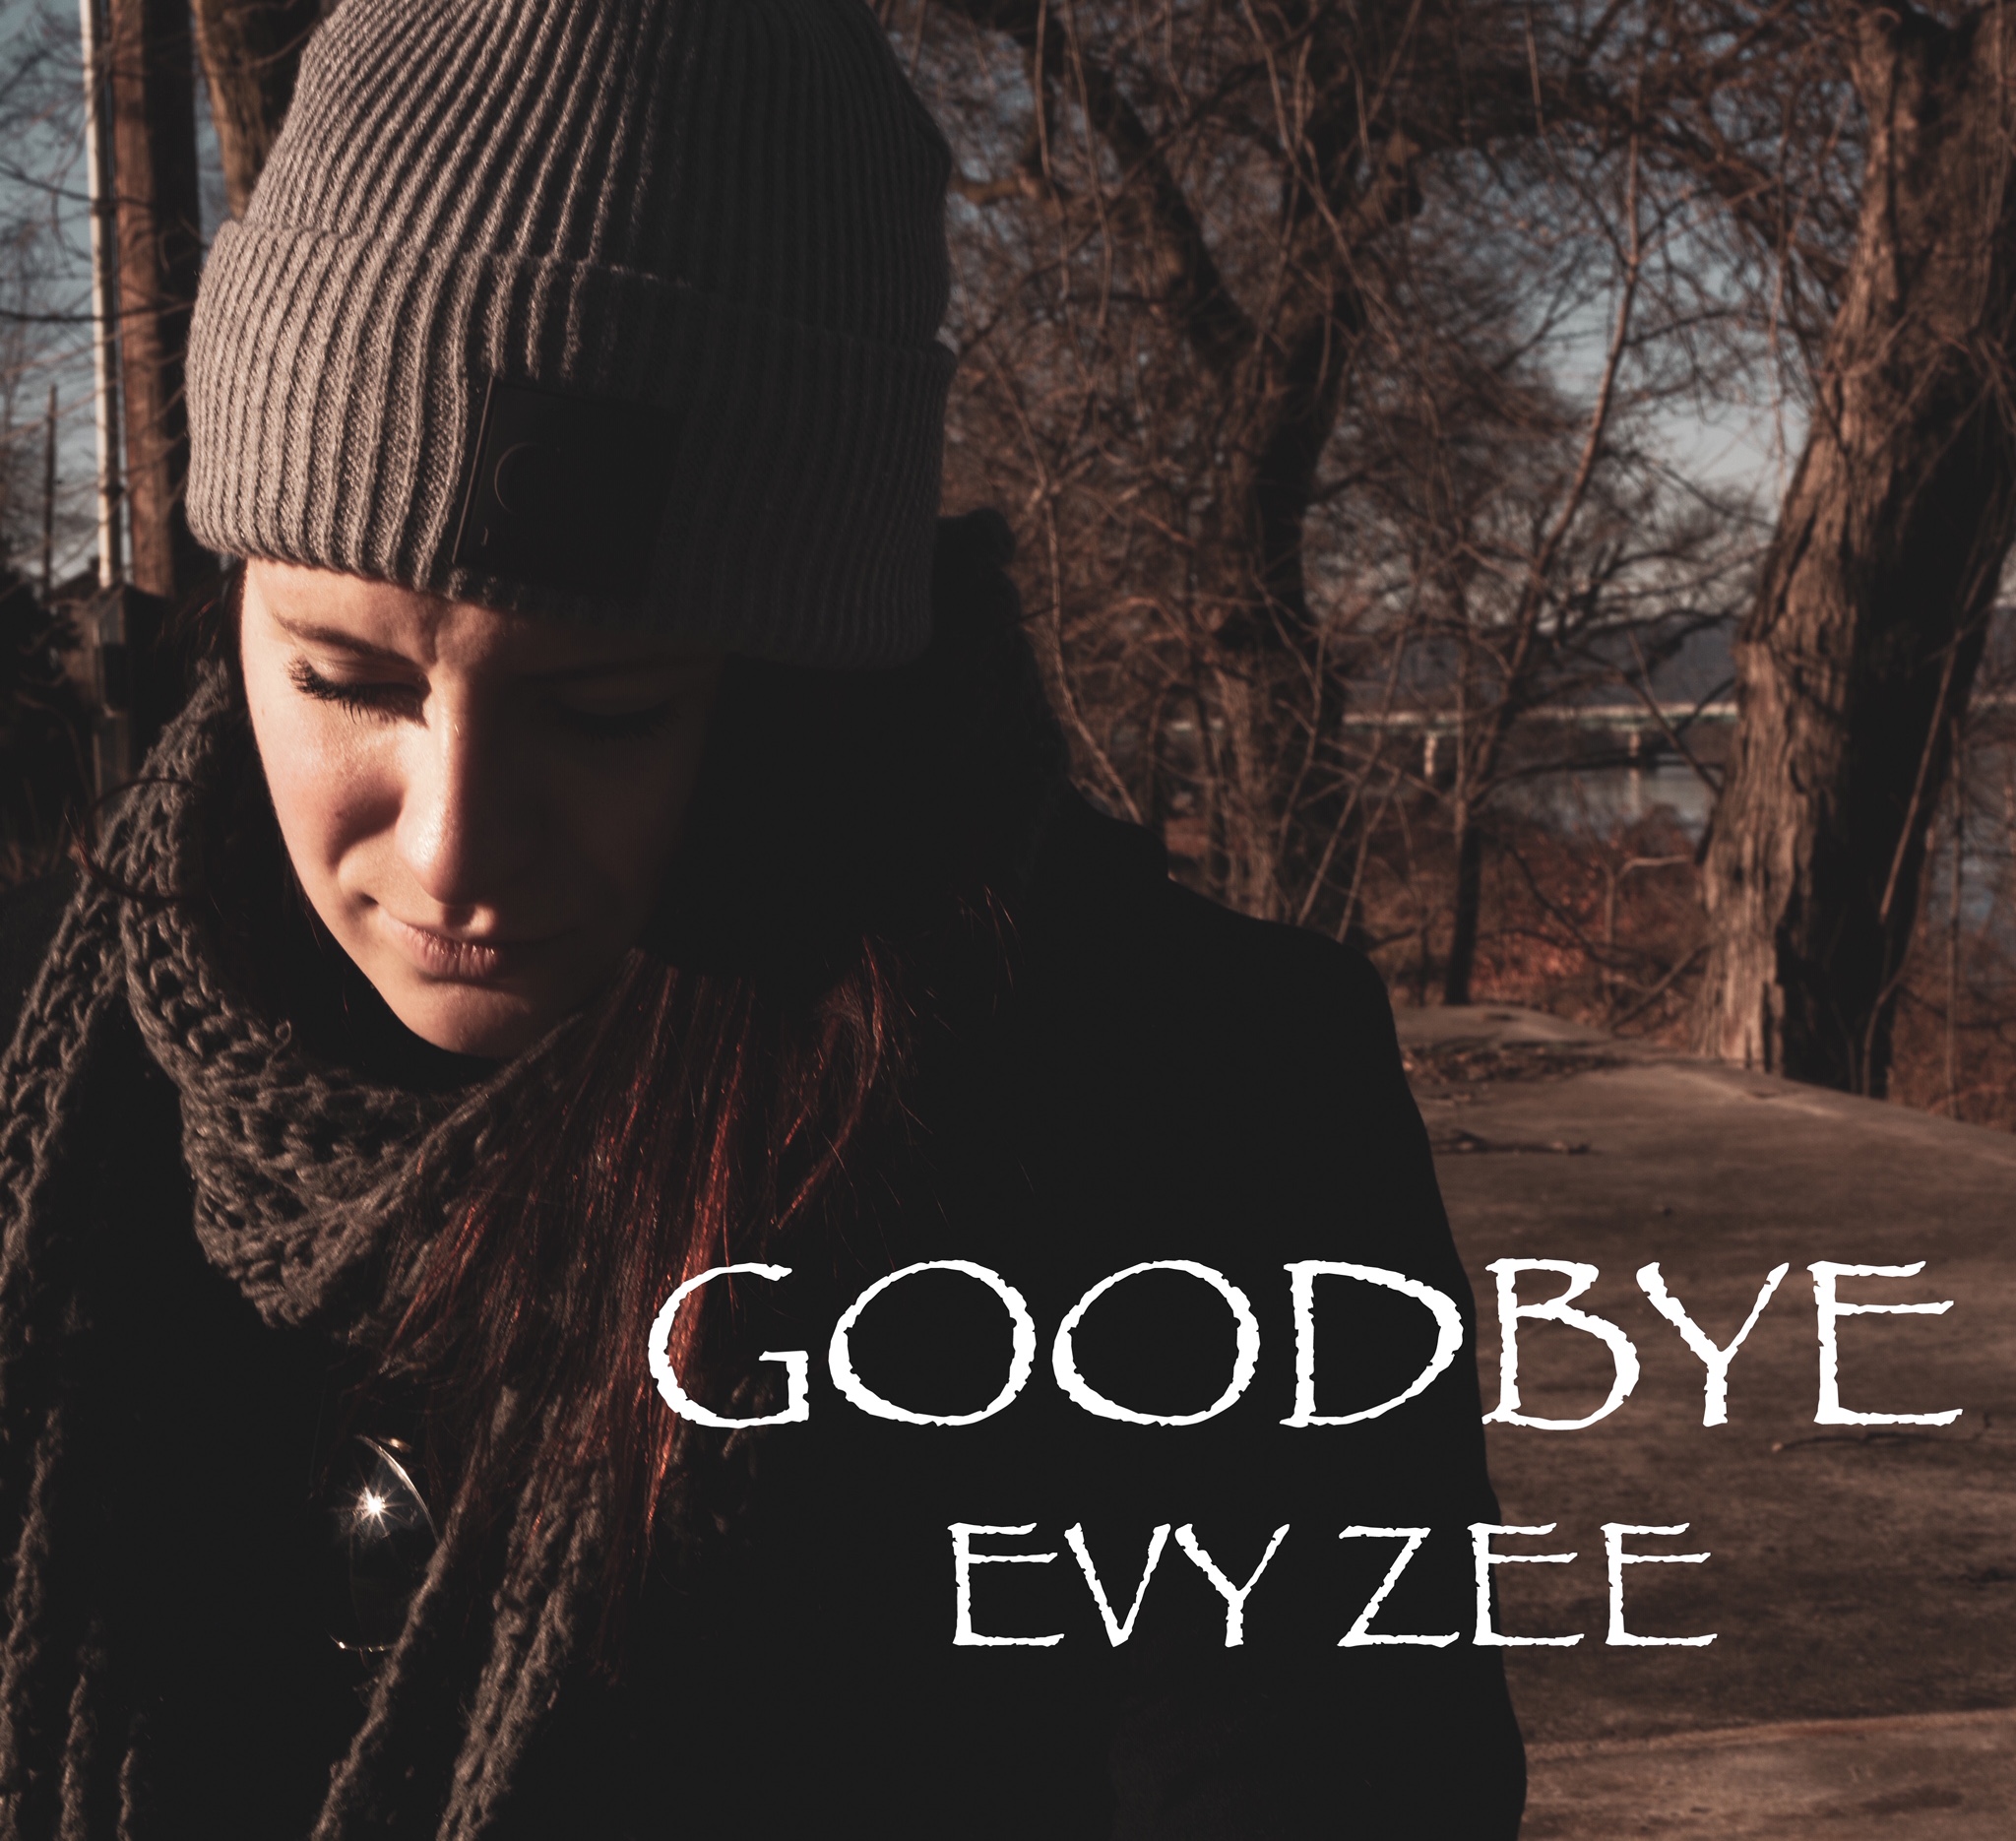 Evy Zee Goodbye Single Release